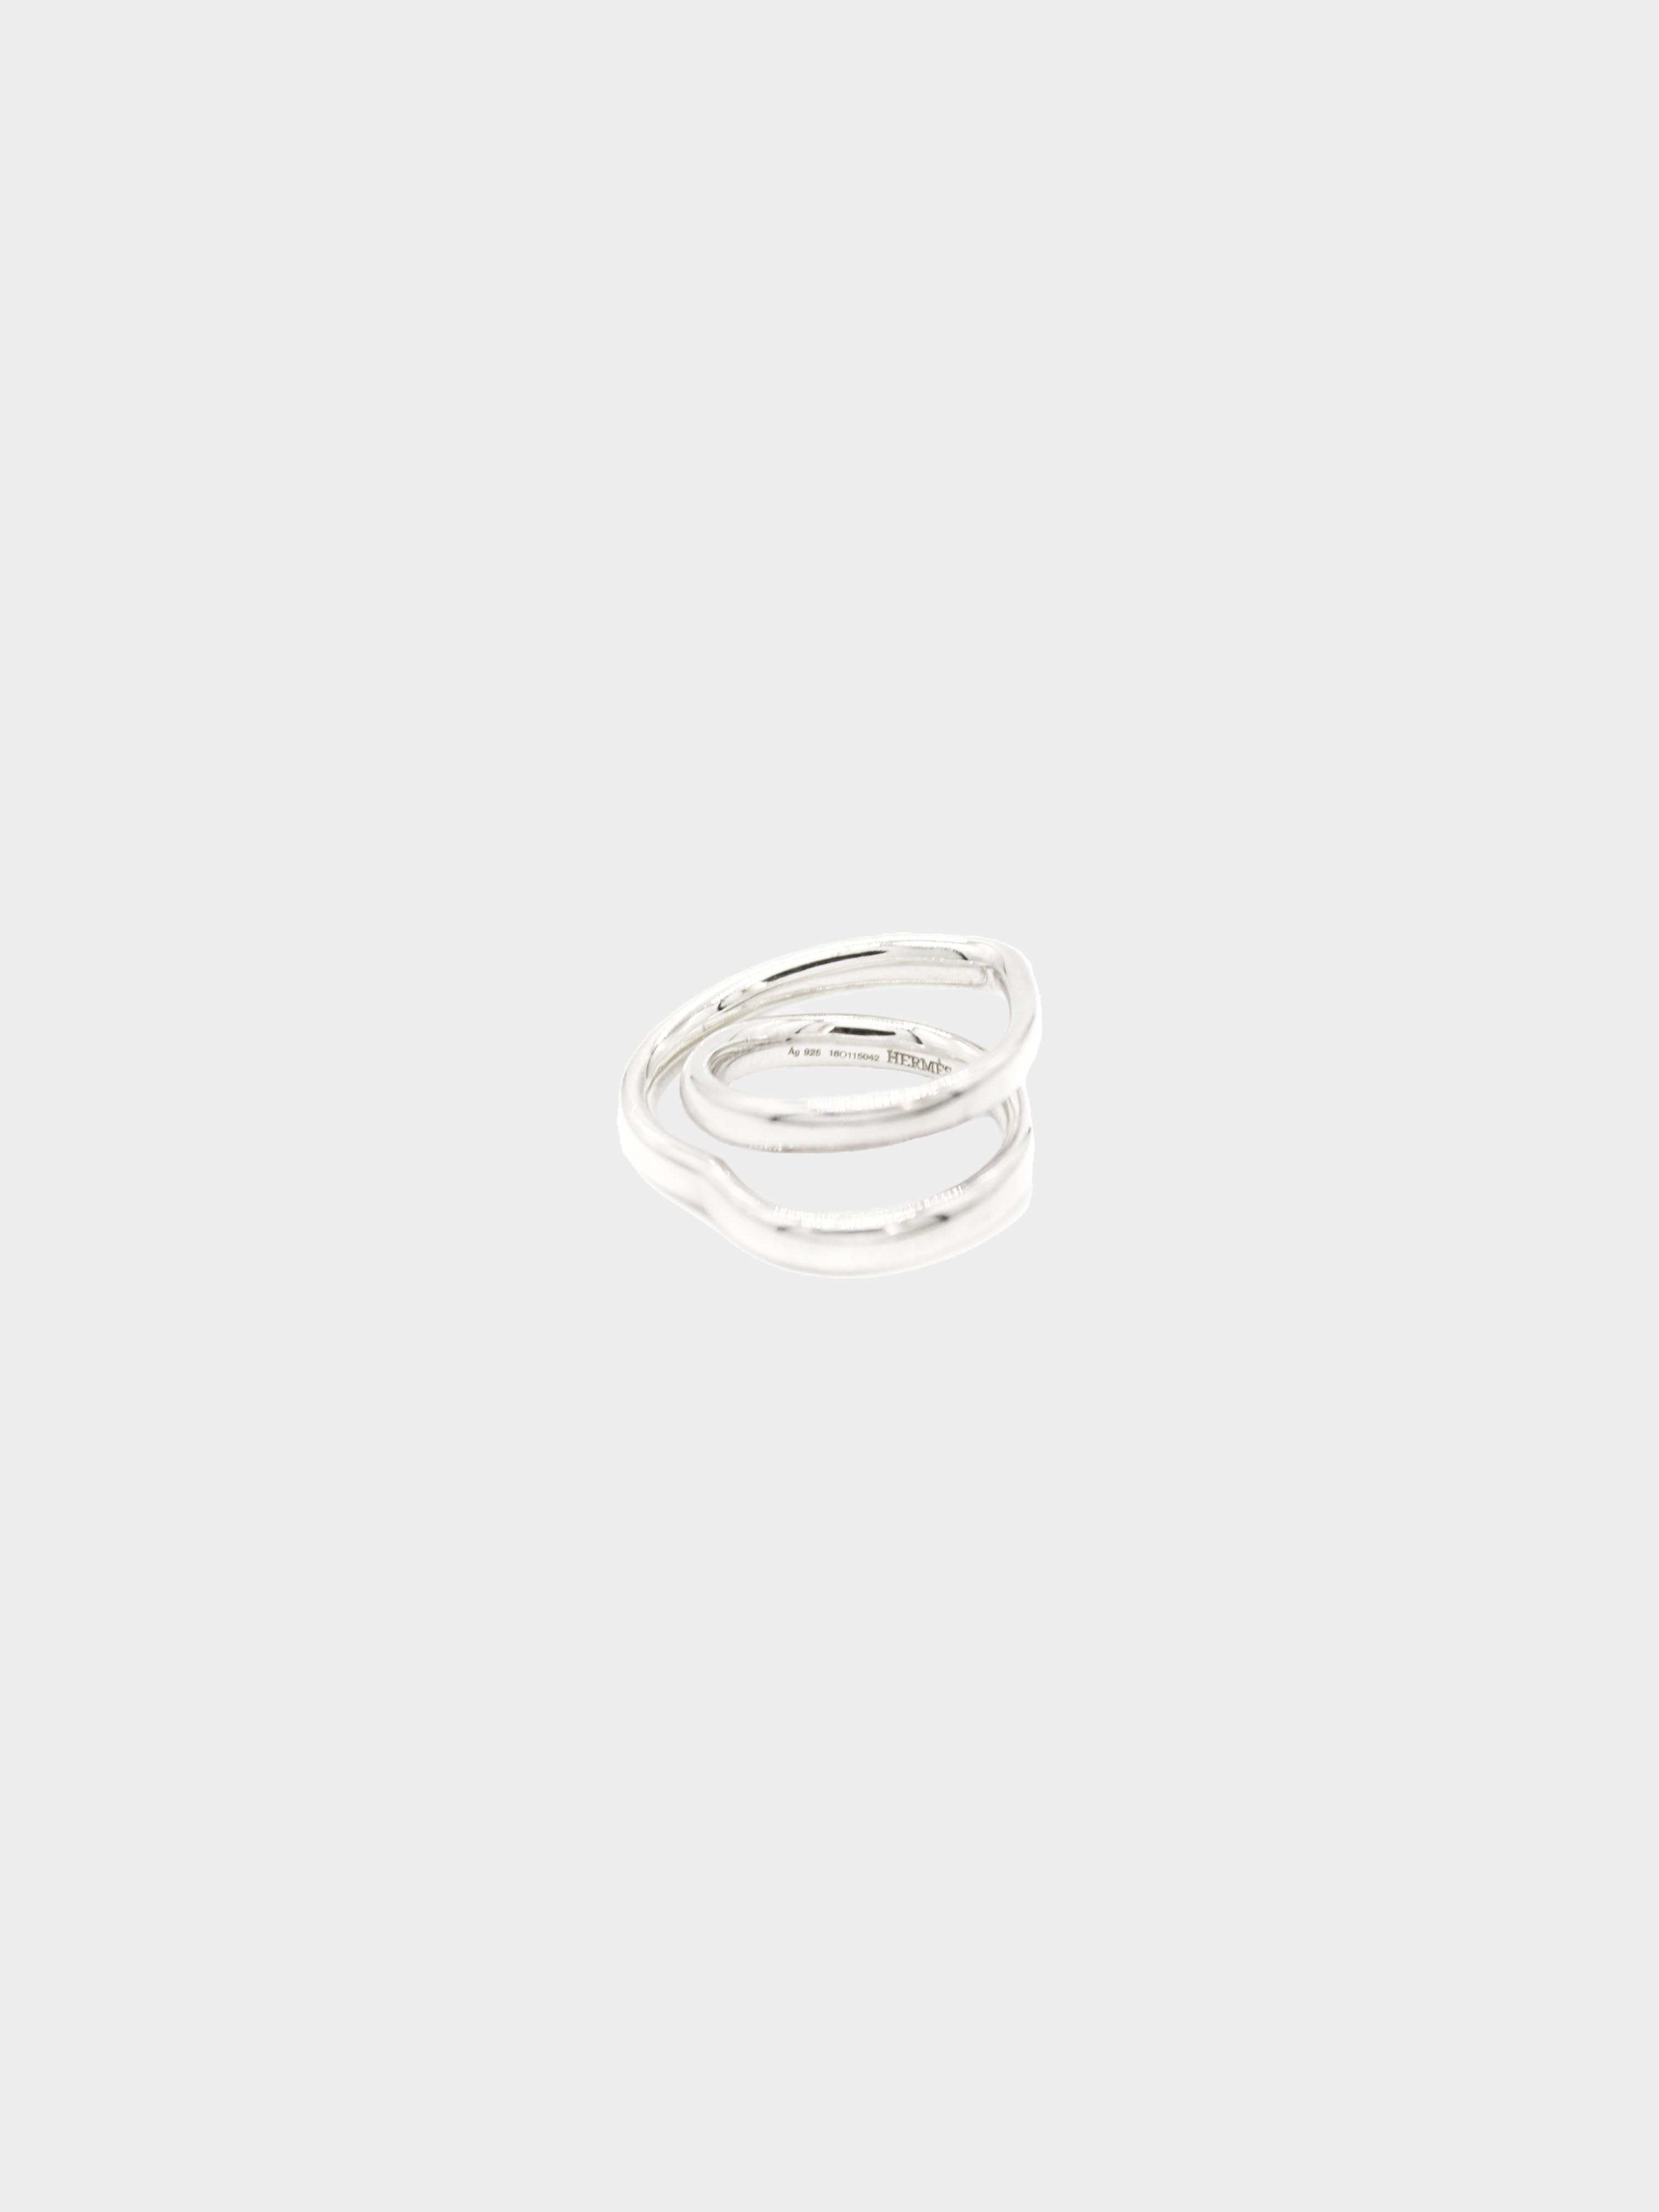 Hermès 2015 Vertige Coeur Double Ring